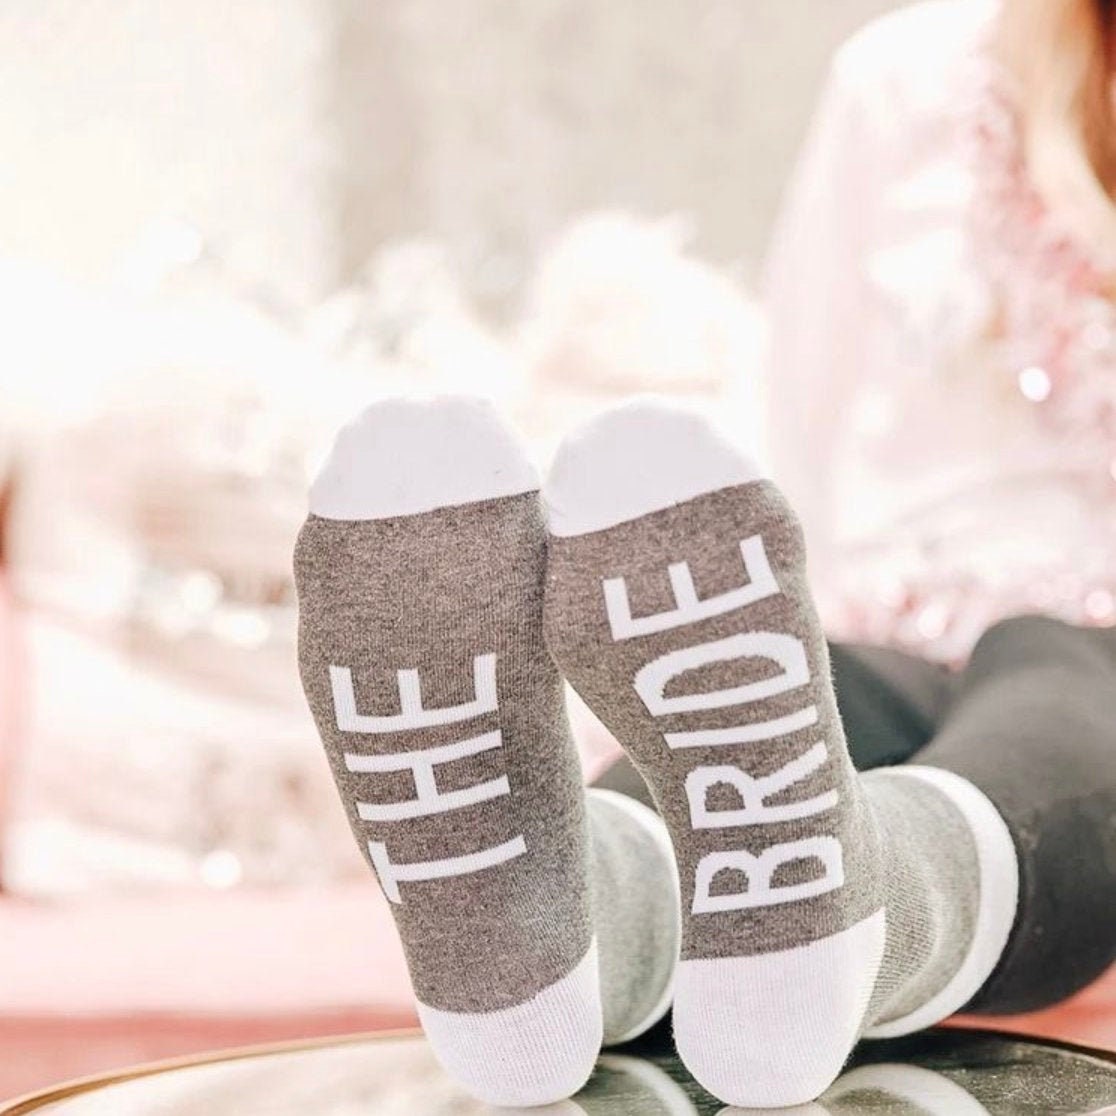 Bride Socks Bride to Be Socks Wedding Socks Bride Gift - Etsy UK